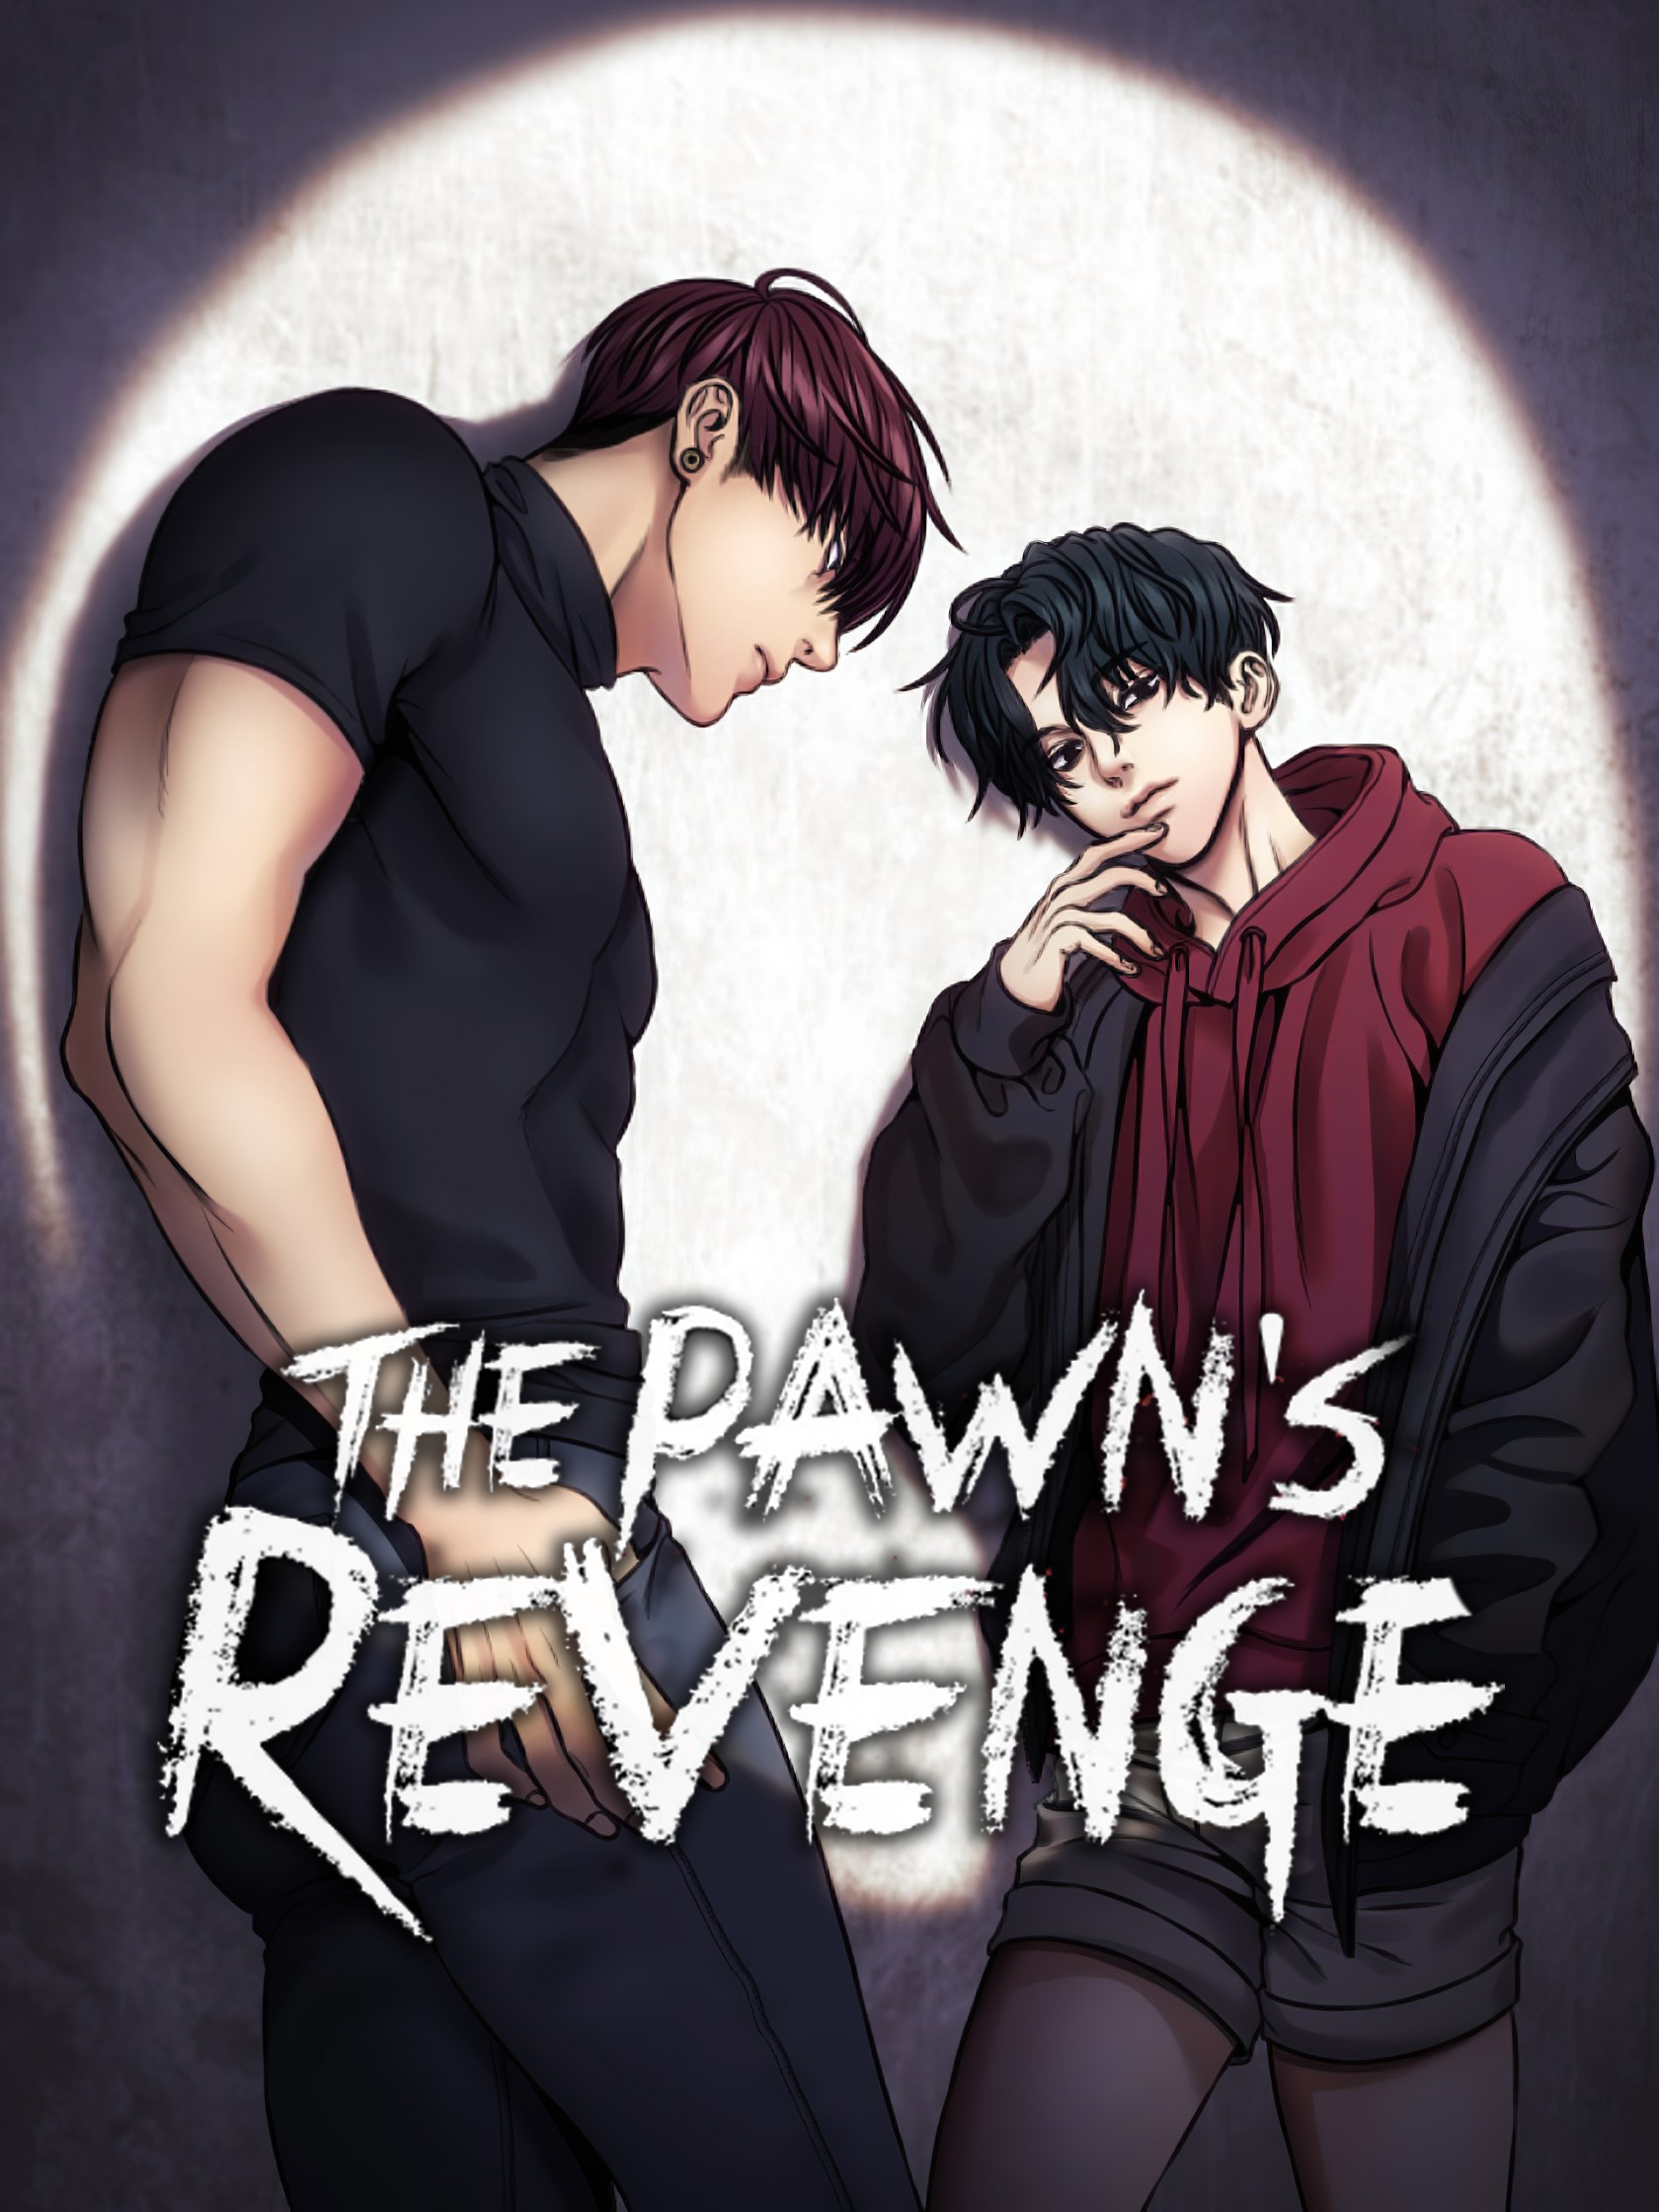 Read The Pawn's Revenge Yaoi BL Smut Manhwa